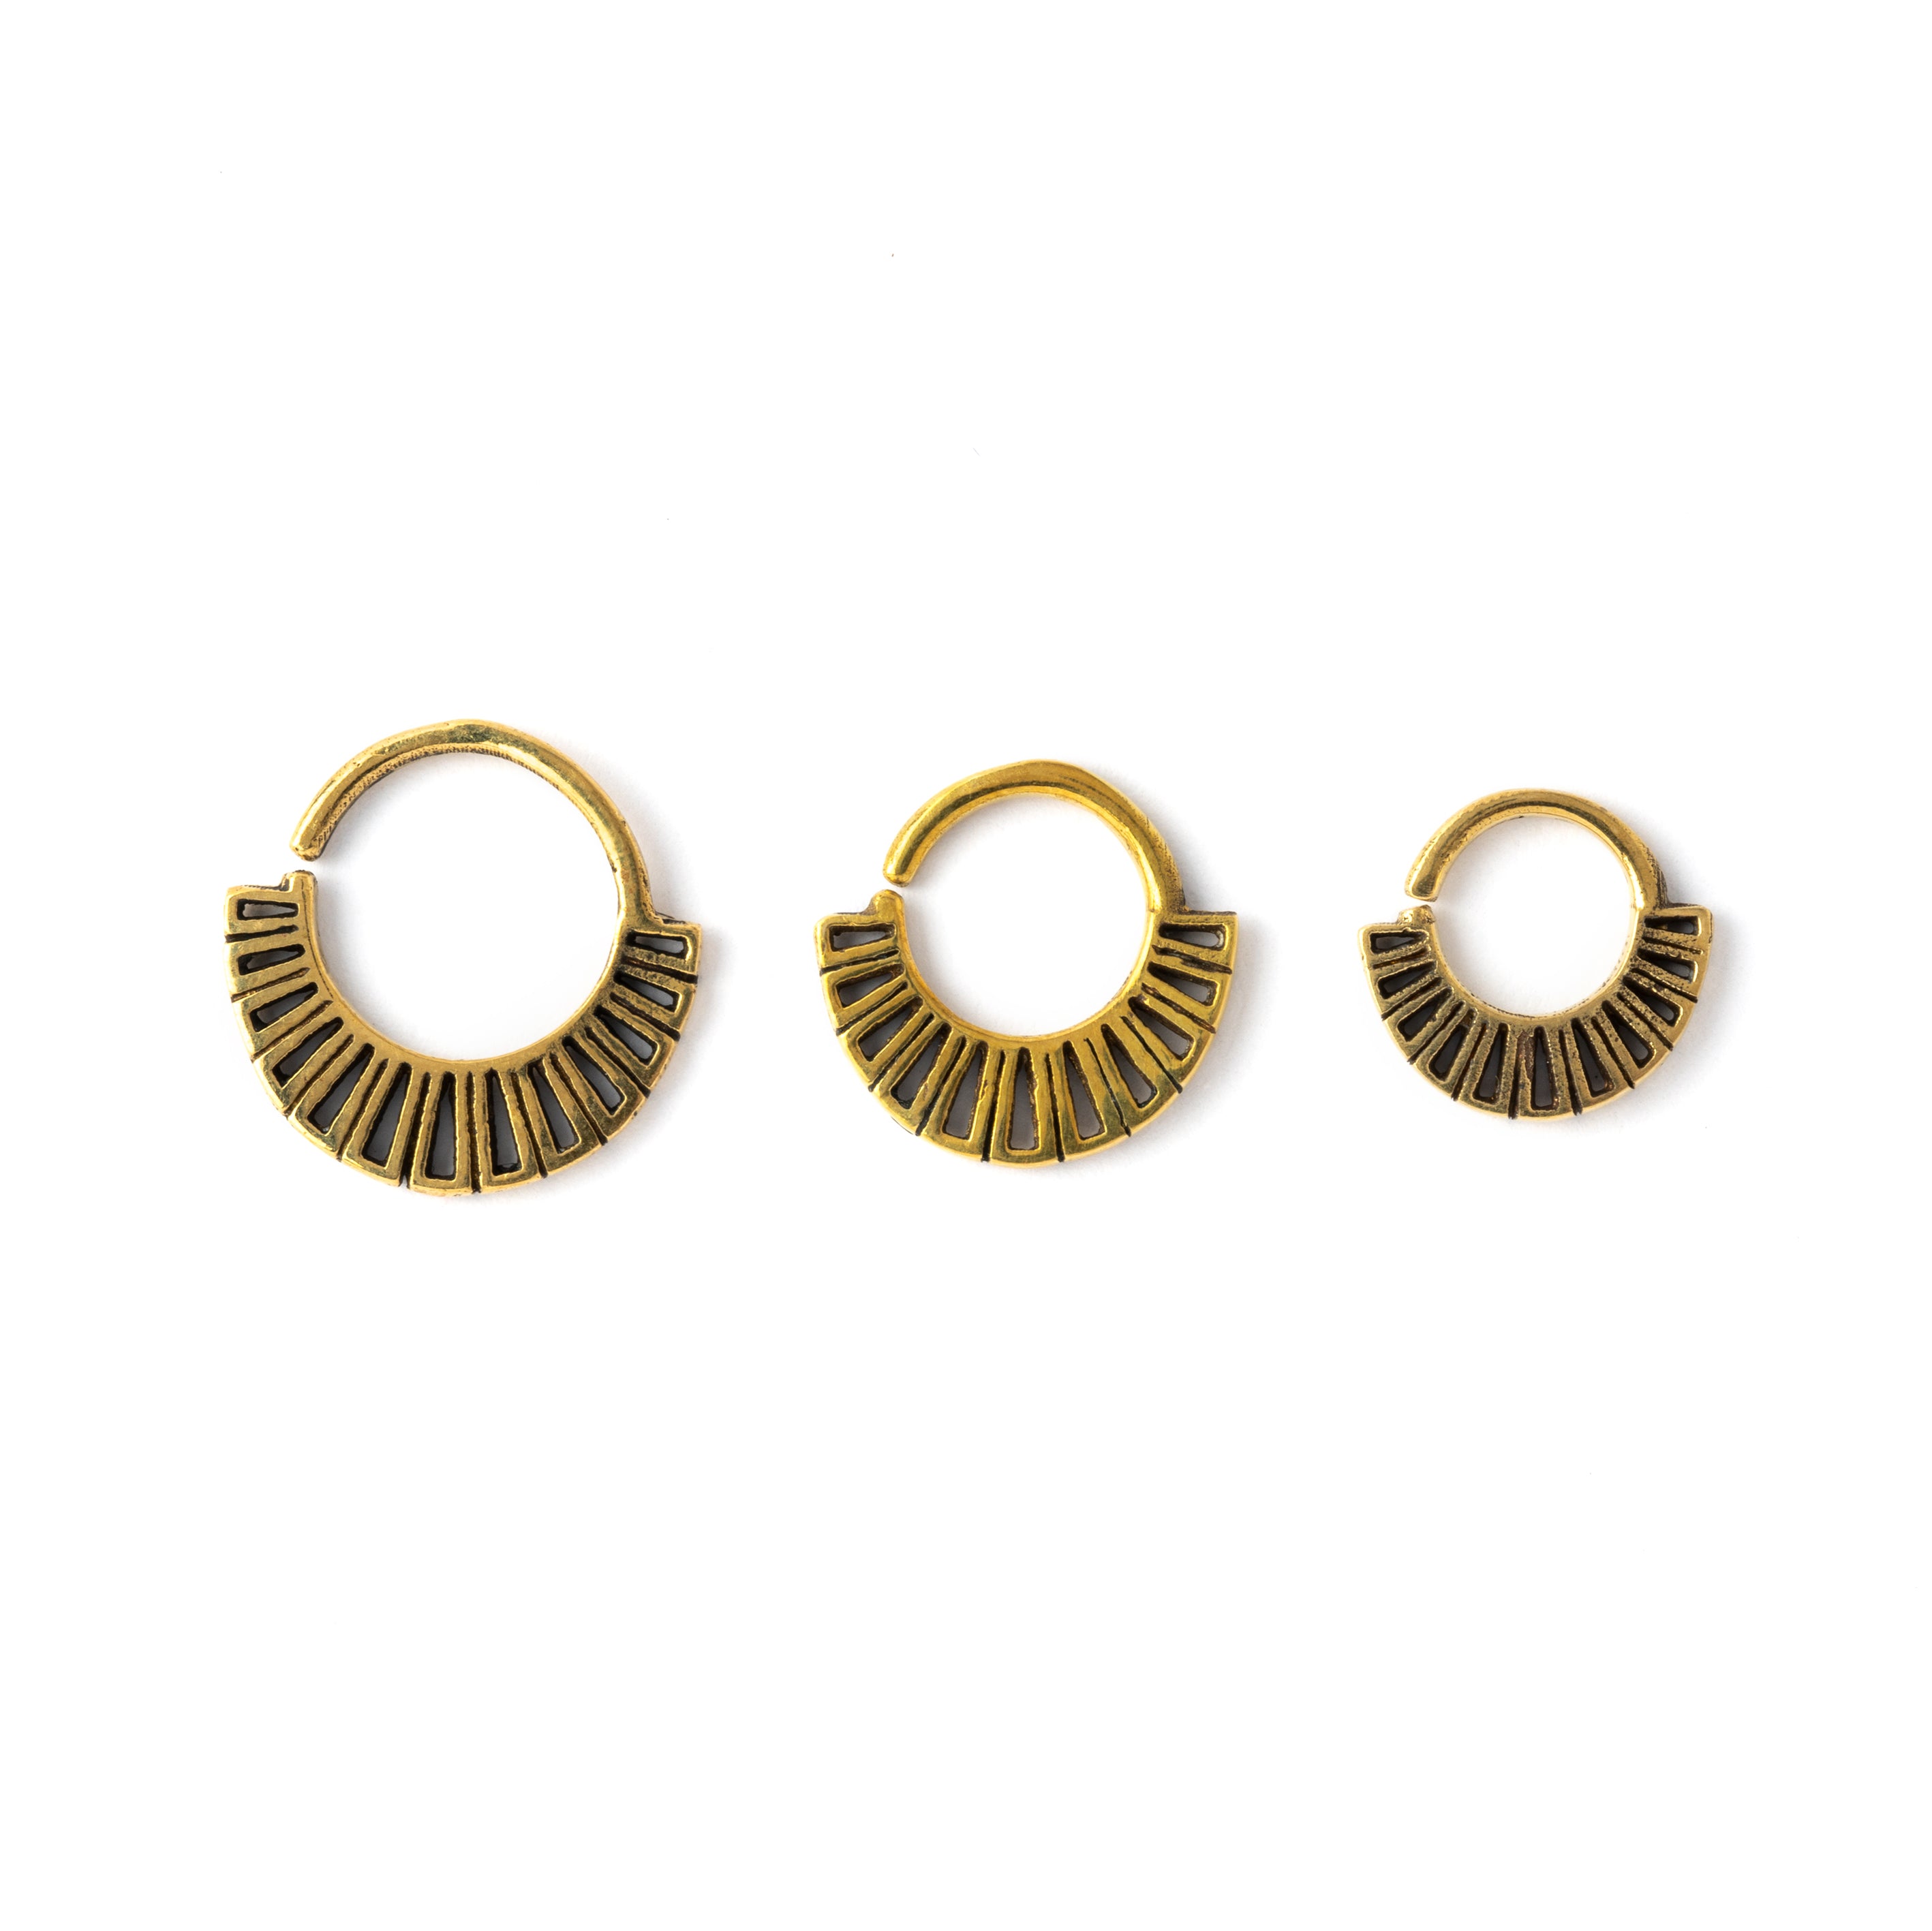 Aditi 18g (1mm), 6mm, 8mm,10mm brass tribal geometric septum piercing rings frontal view